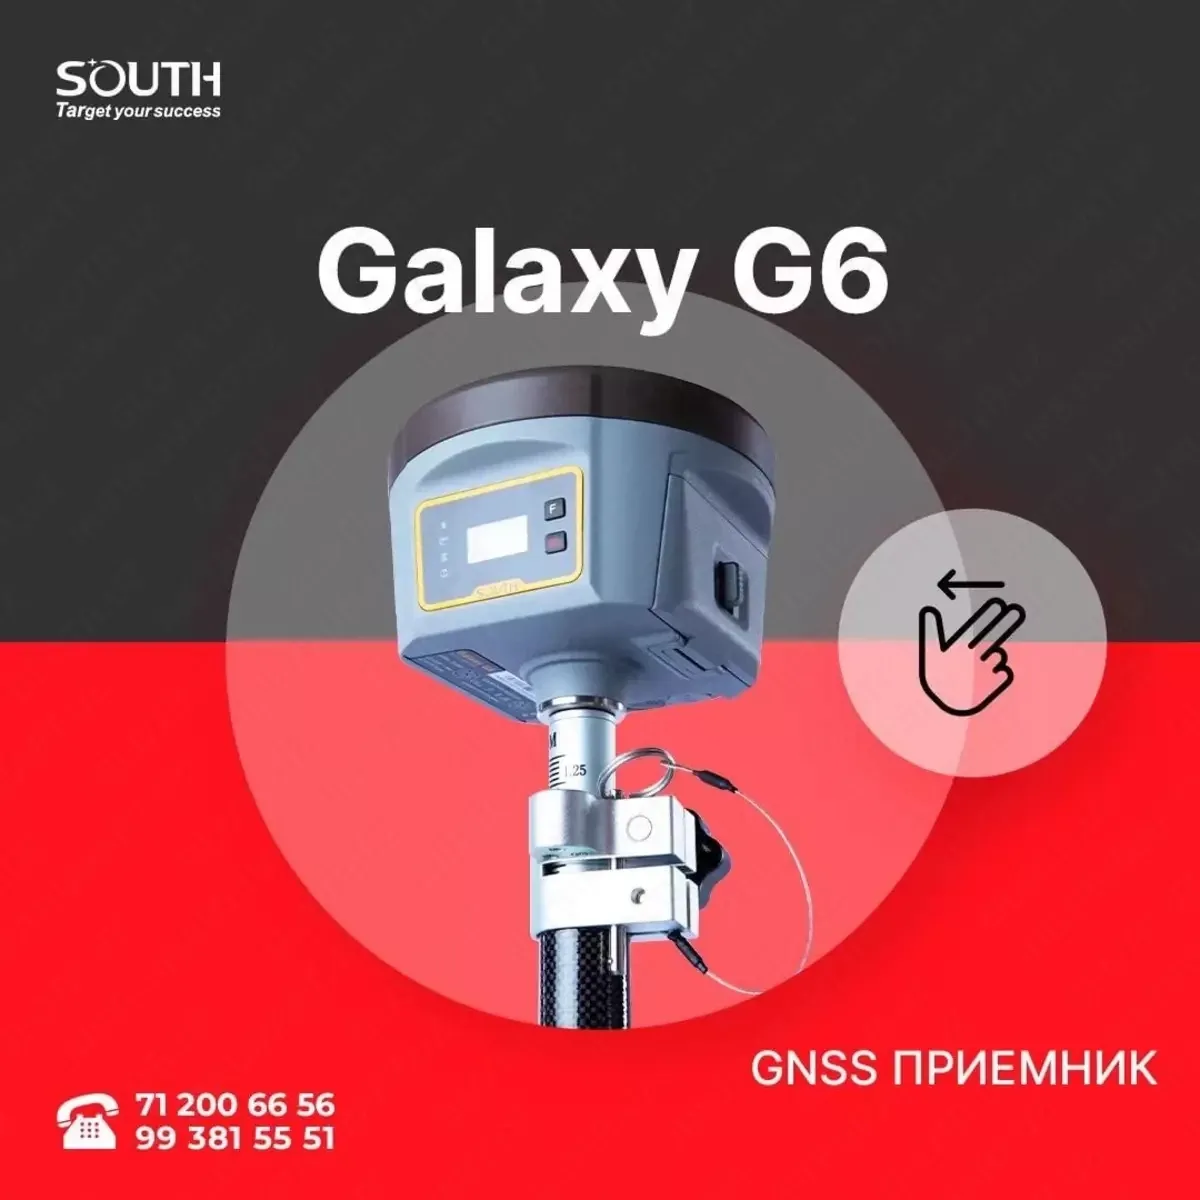 GNSS приемник SOUTH GALAXY G6#1